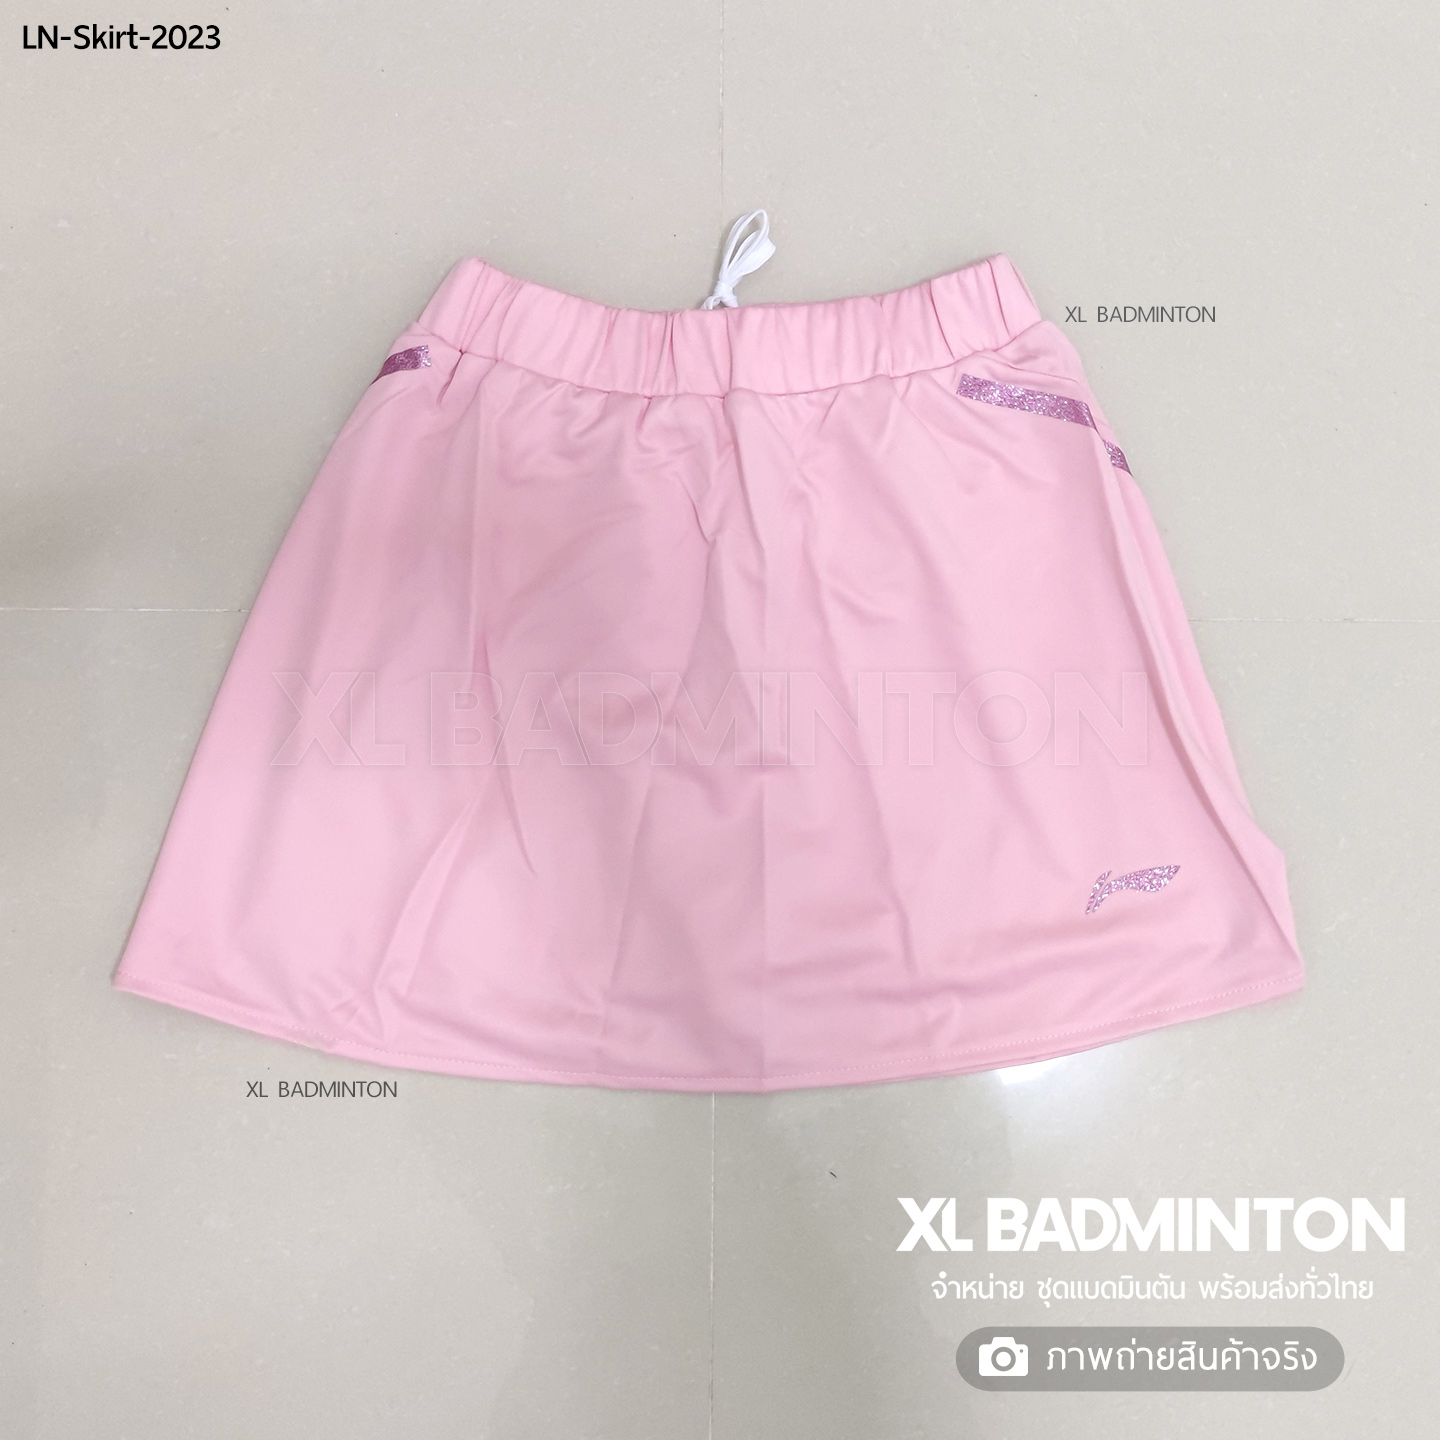 ln-skirt-2023-pink-1x